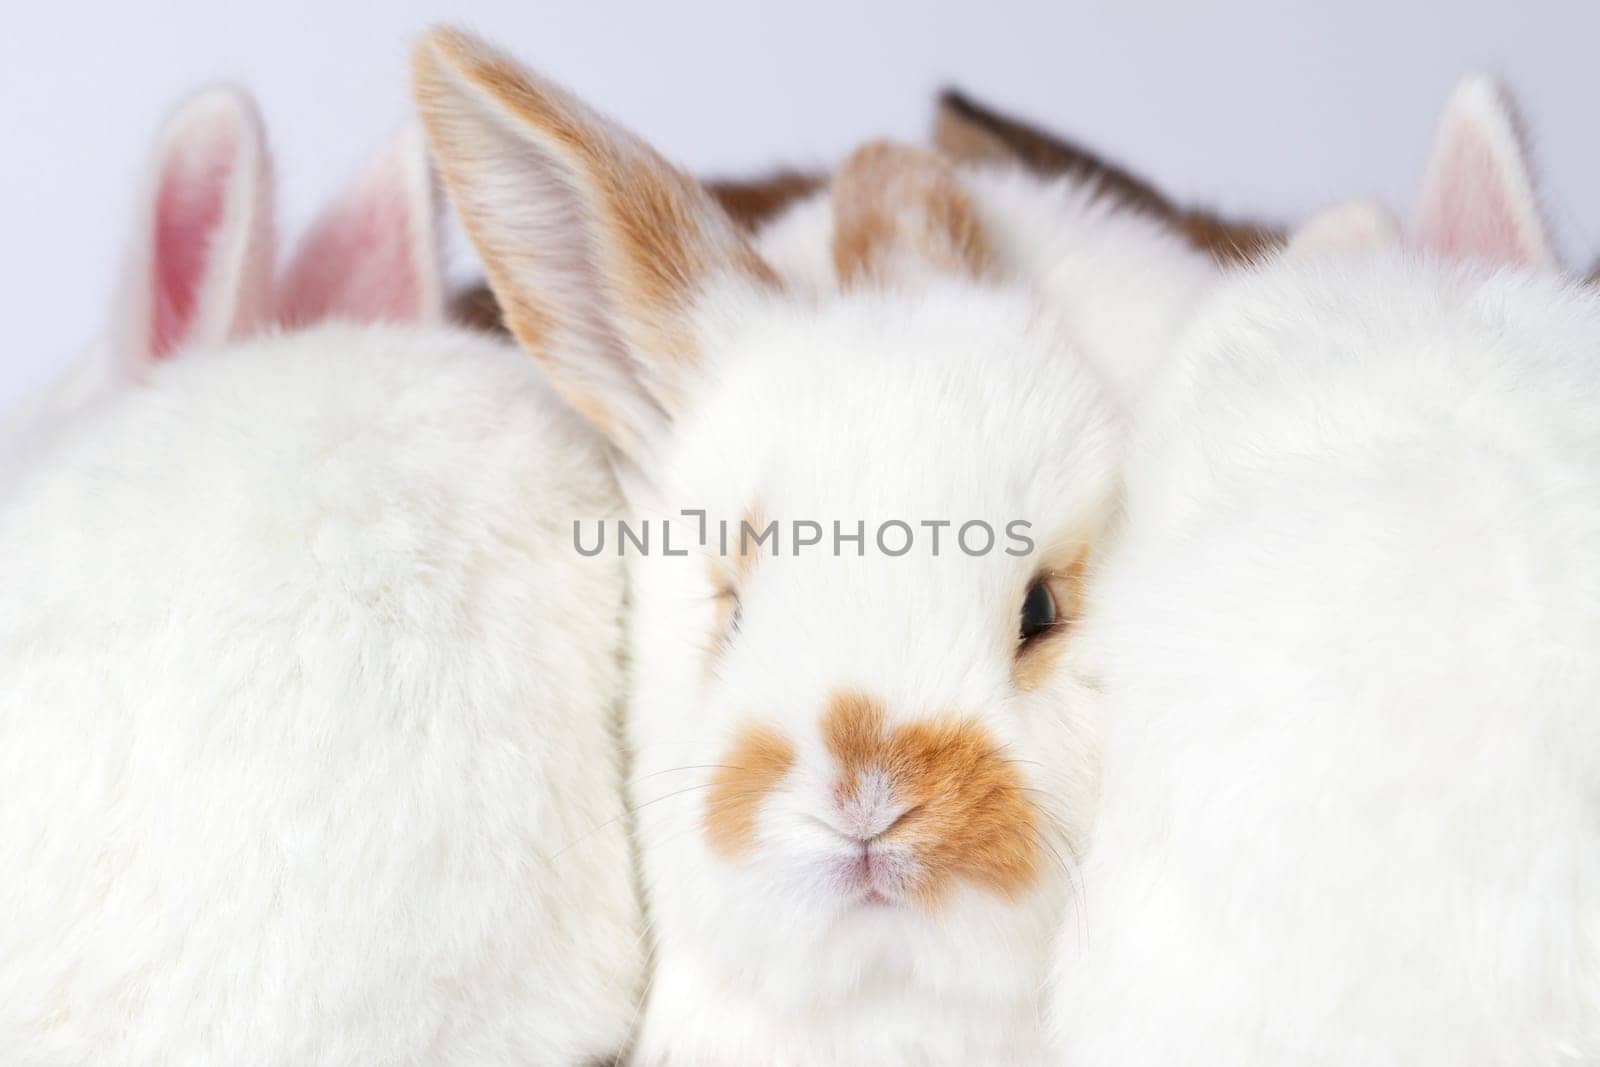 rabbits huddled closely together by drakuliren